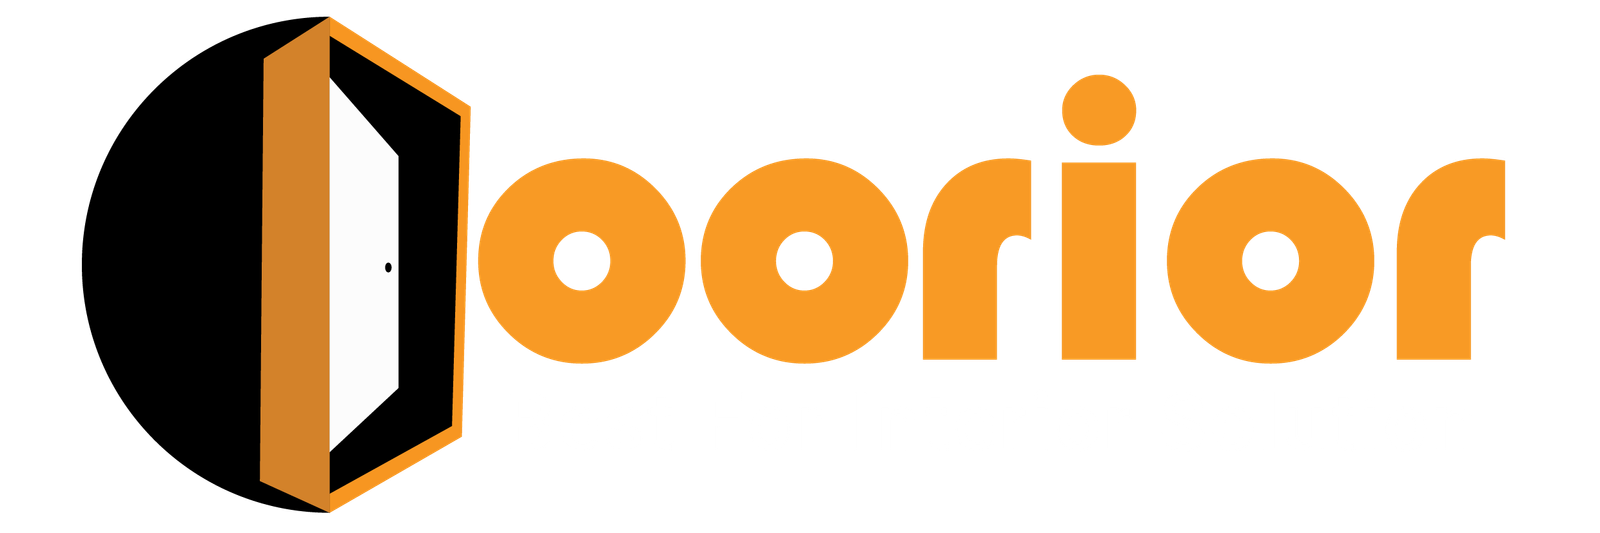 Doorior Best For Interior Solution